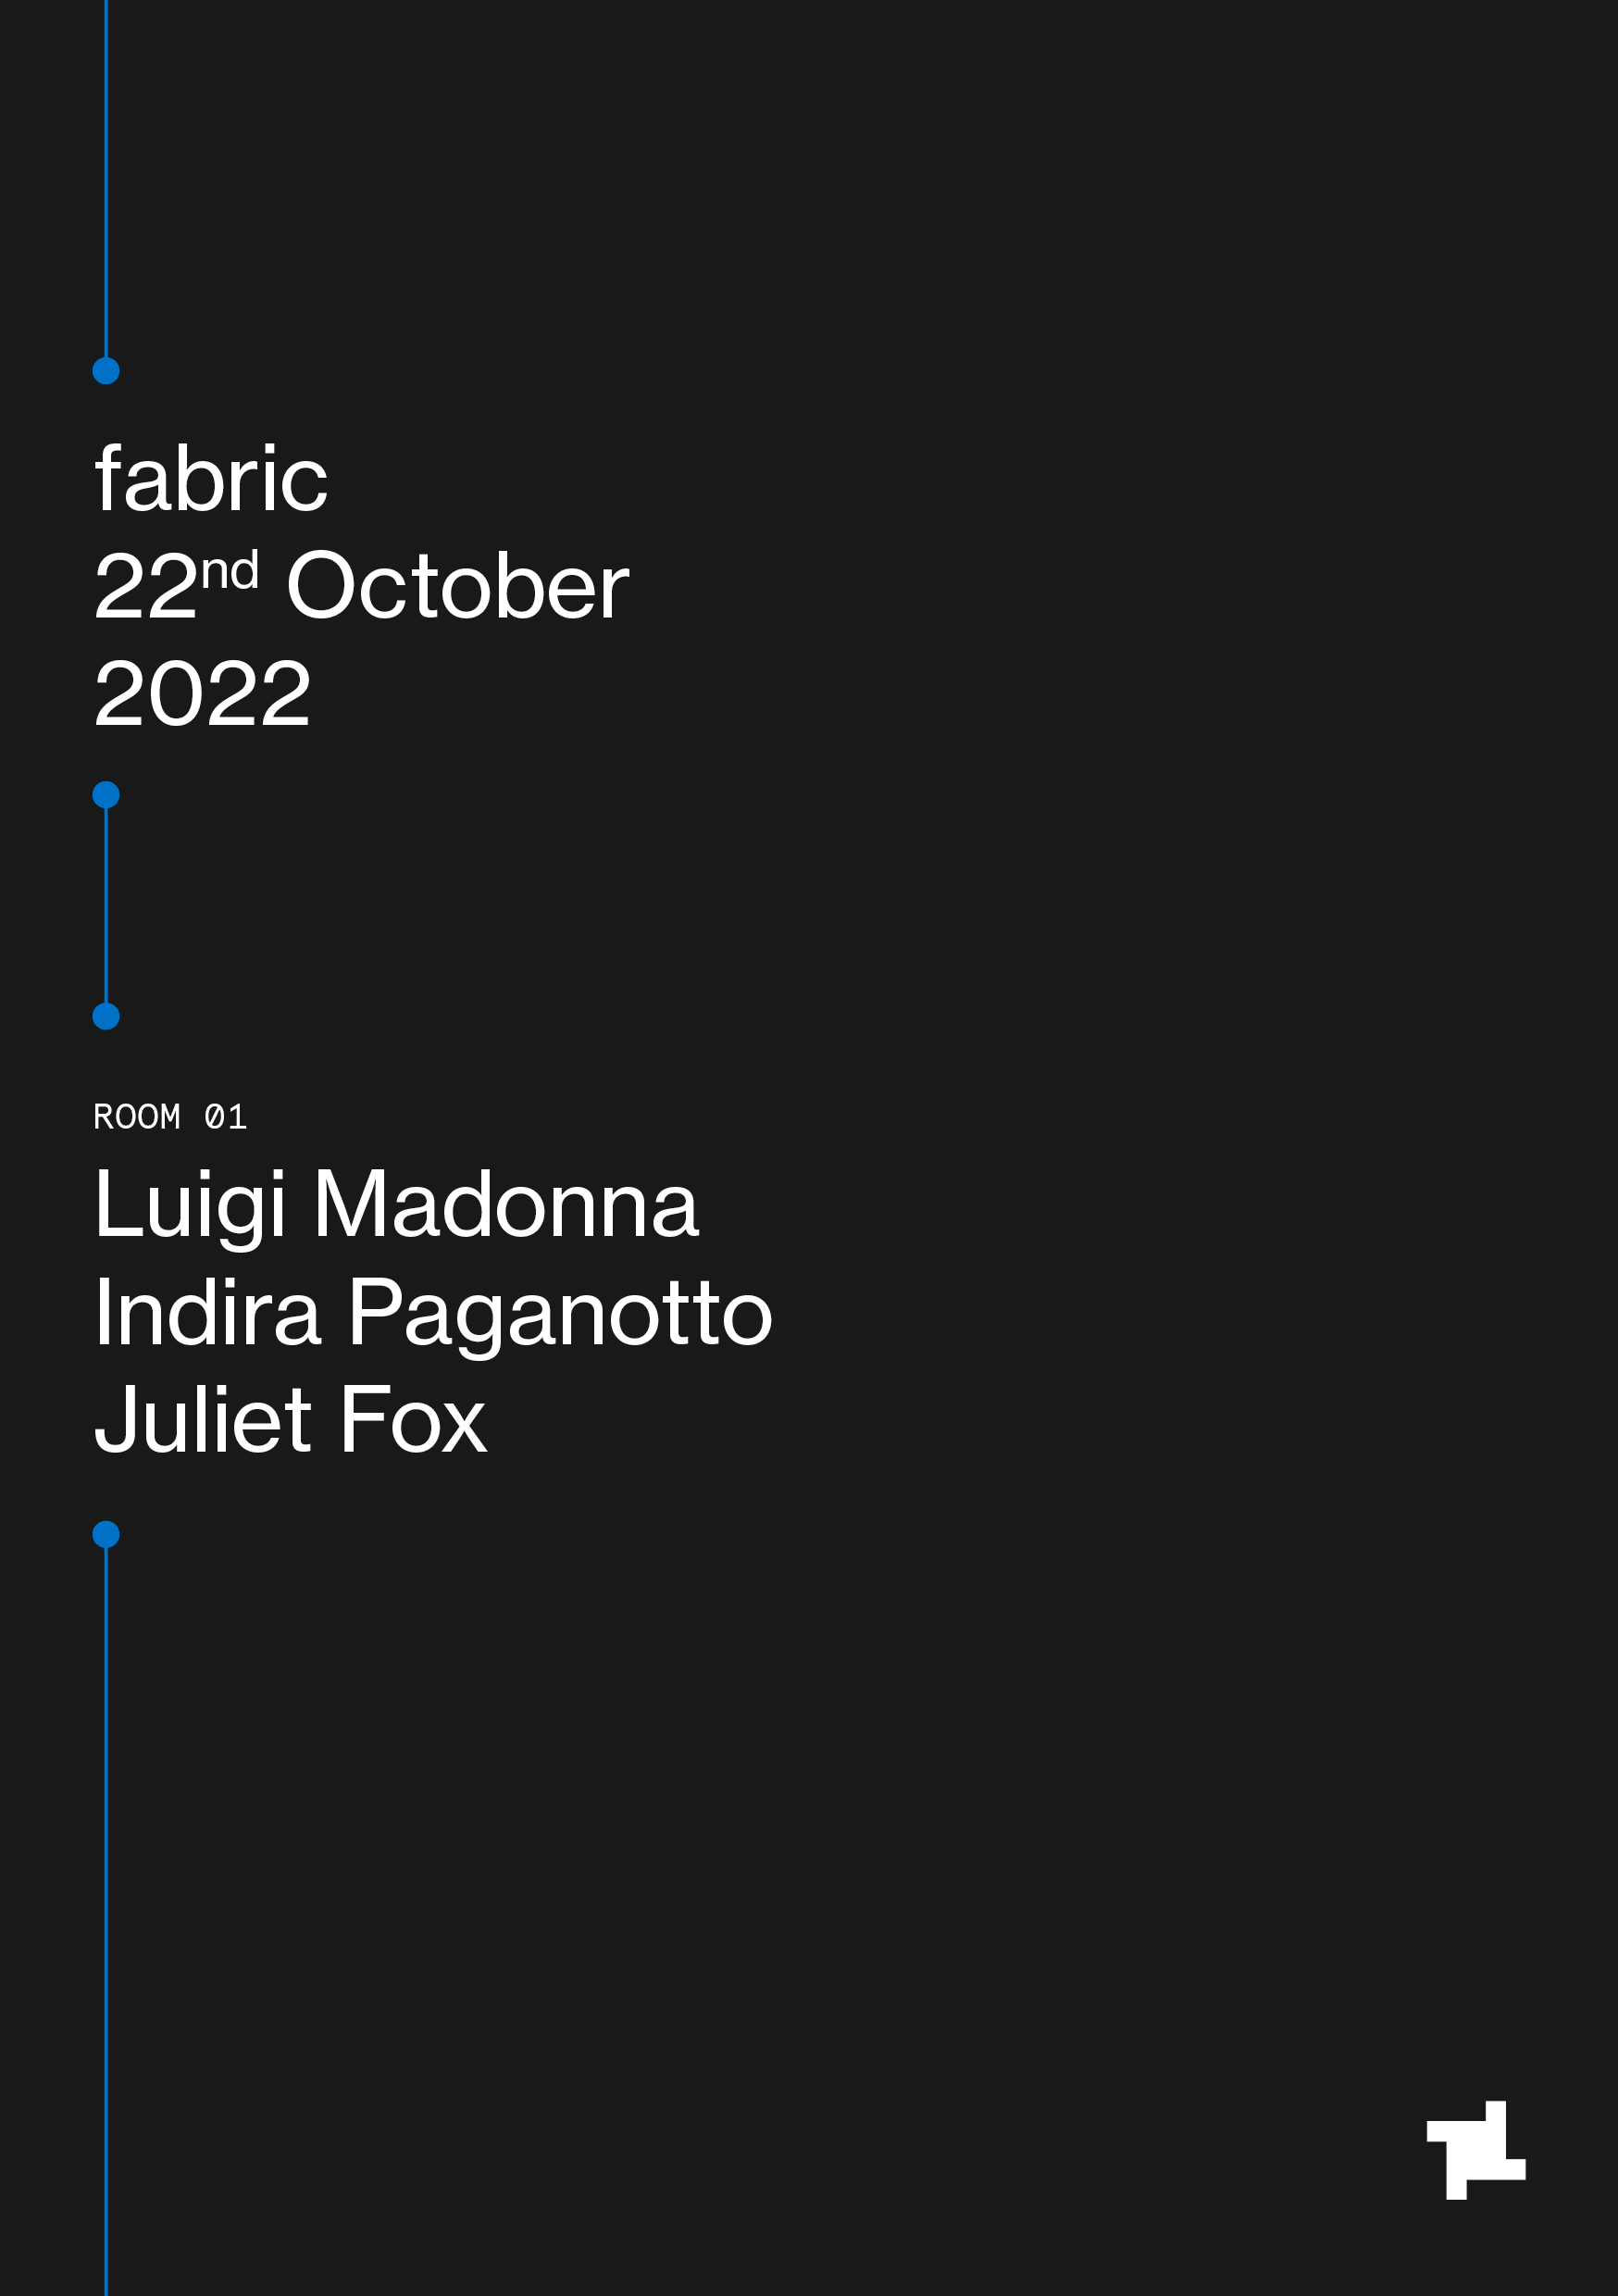 fabric: Luigi Madonna, Indira Paganotto, Juliet Fox - Flyer front